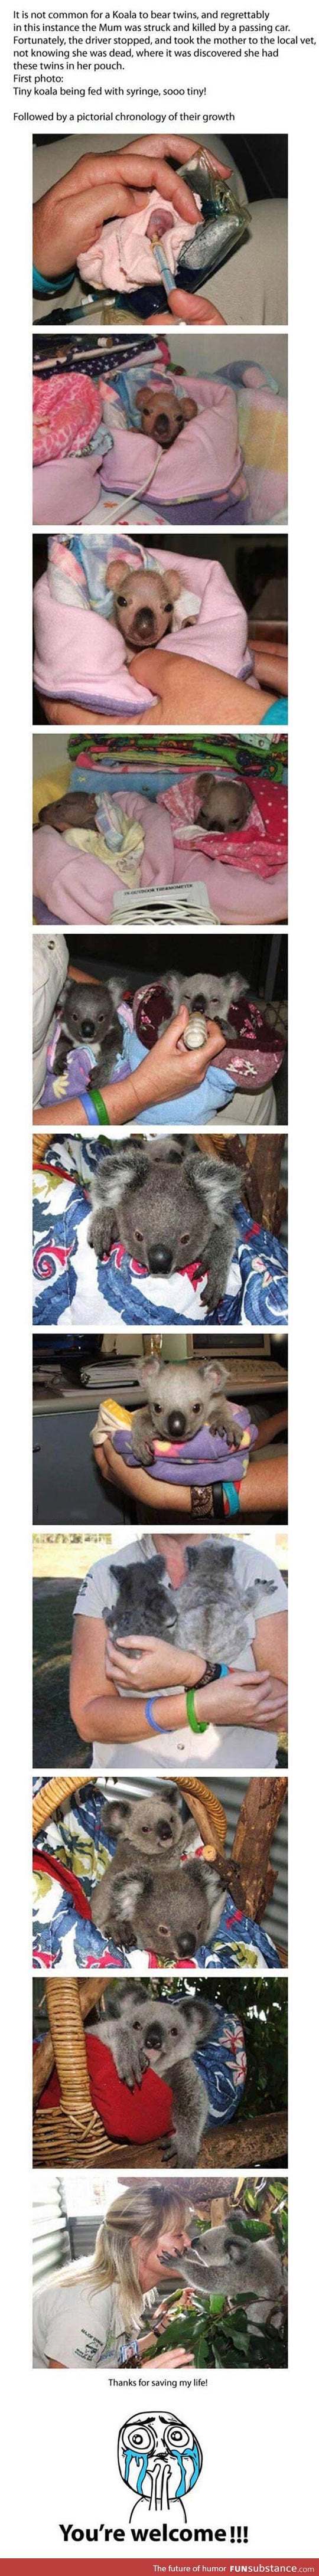 Rescuing koalas